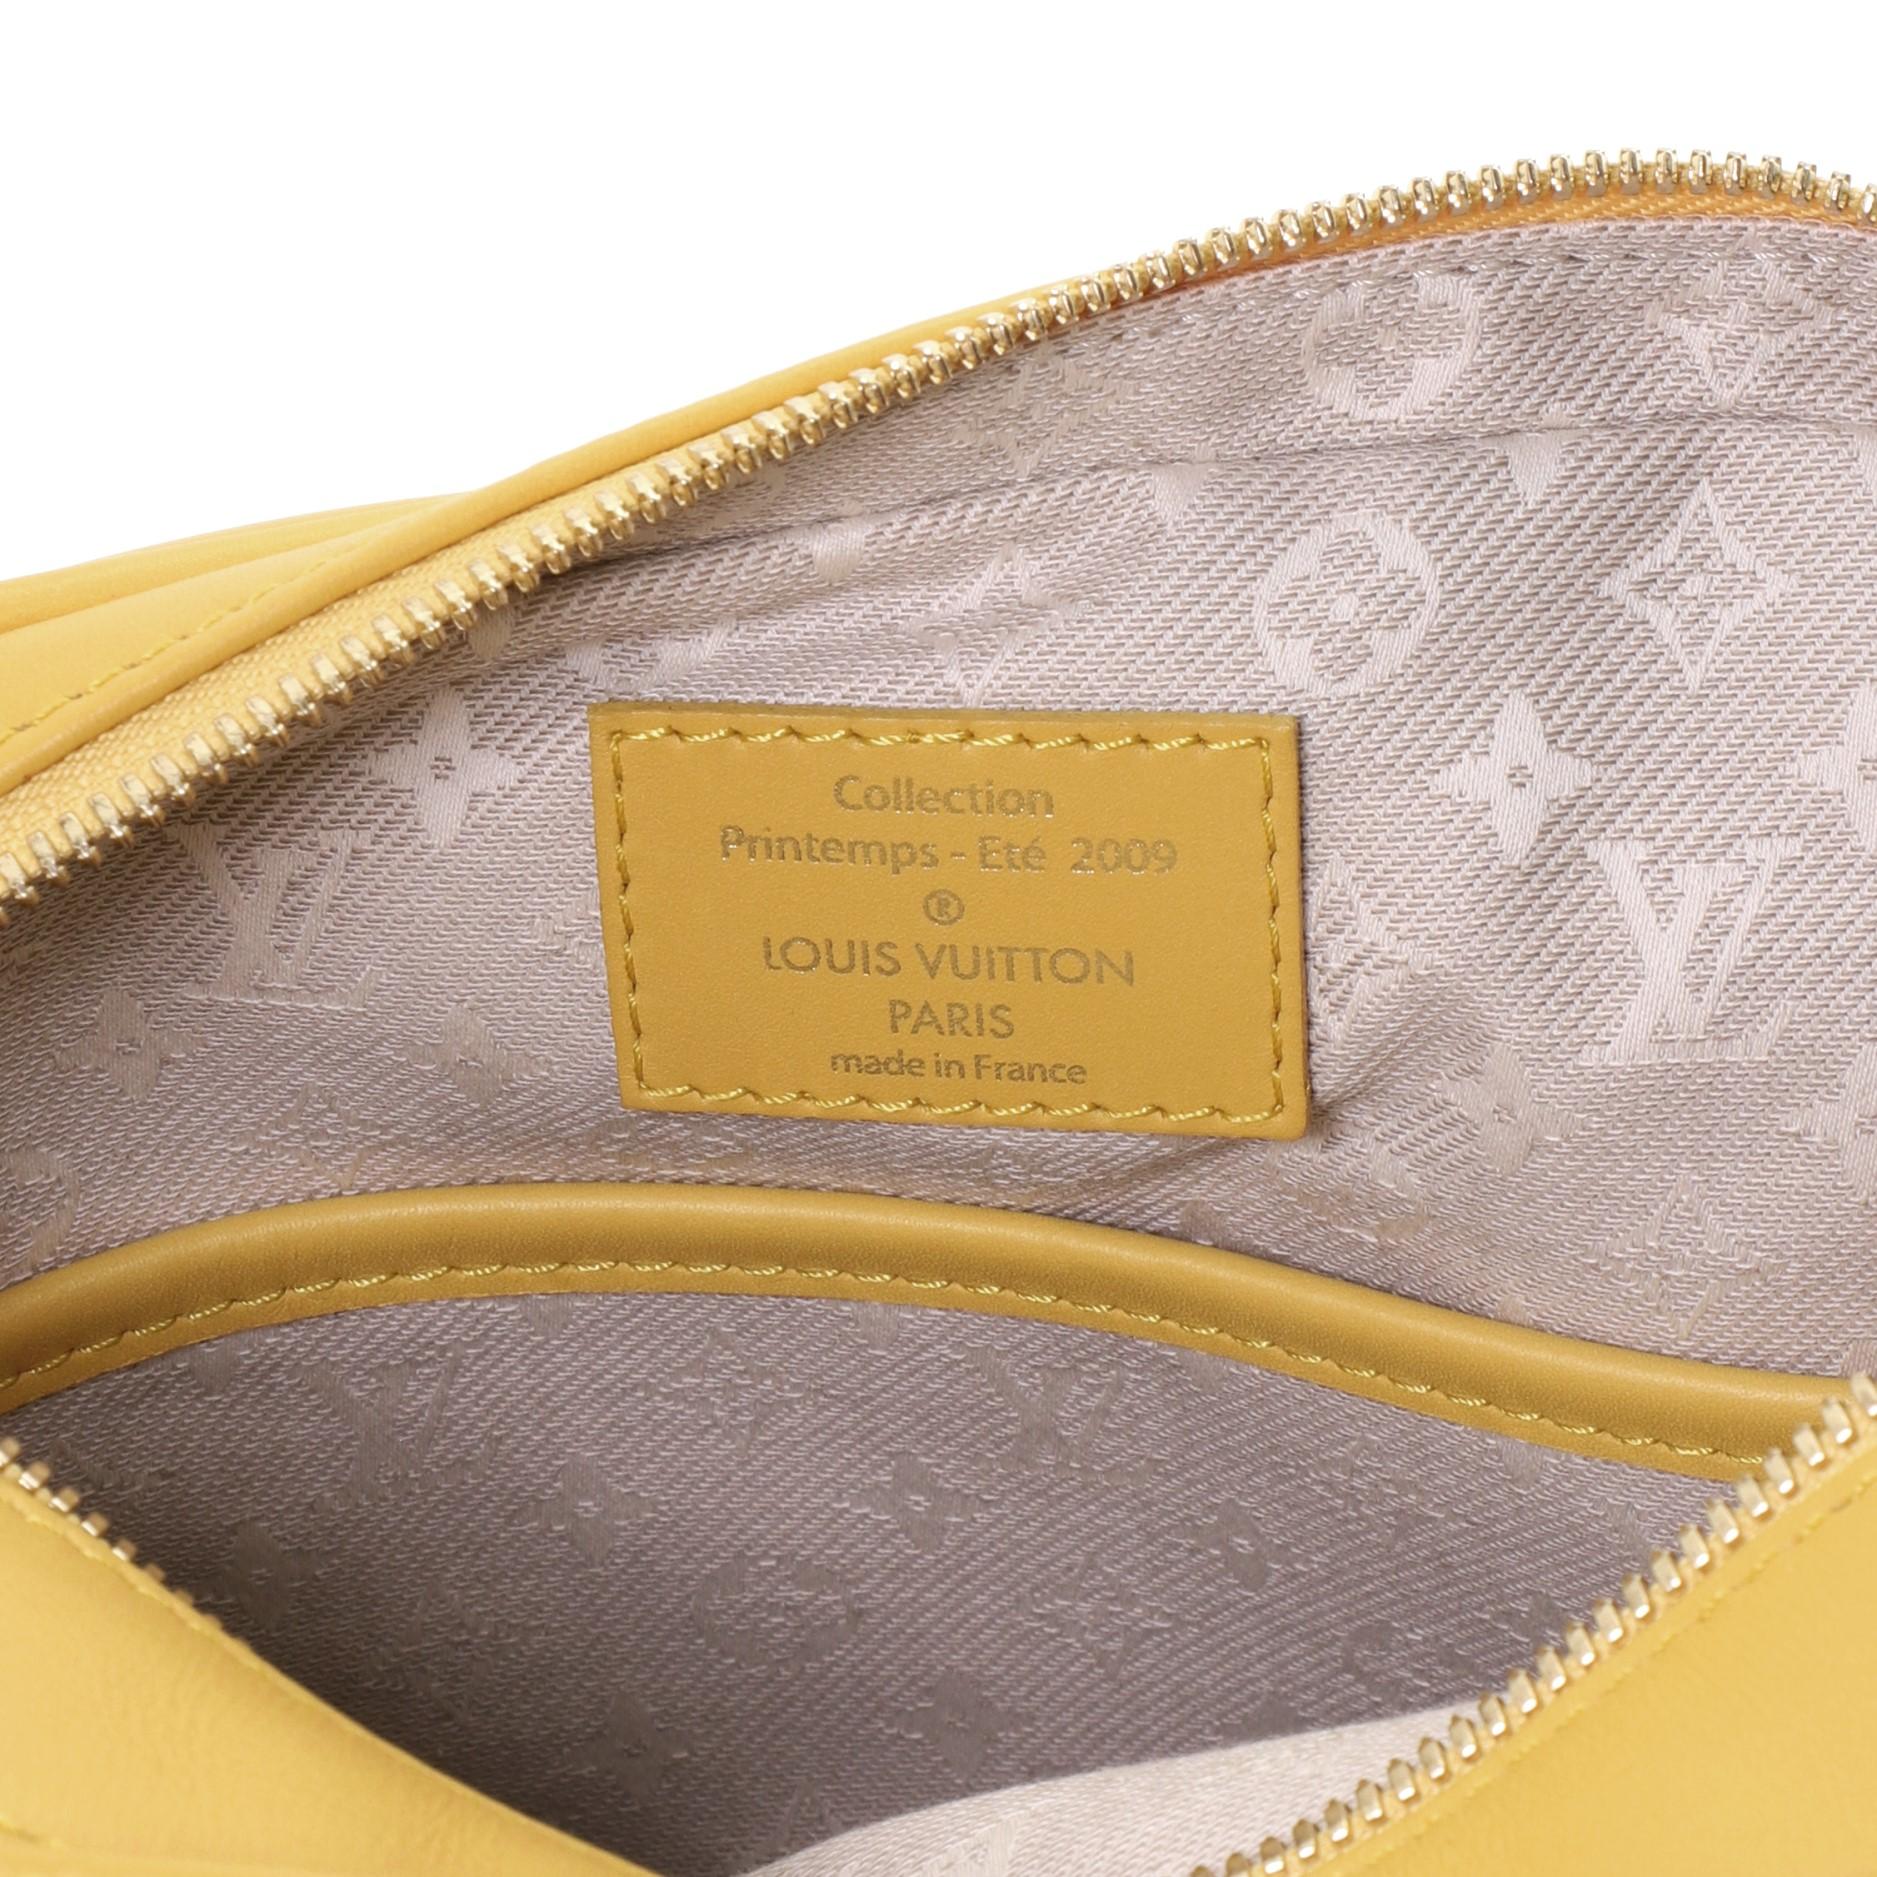 Louis Vuitton Flight Paname Takeoff Bag Leather 1